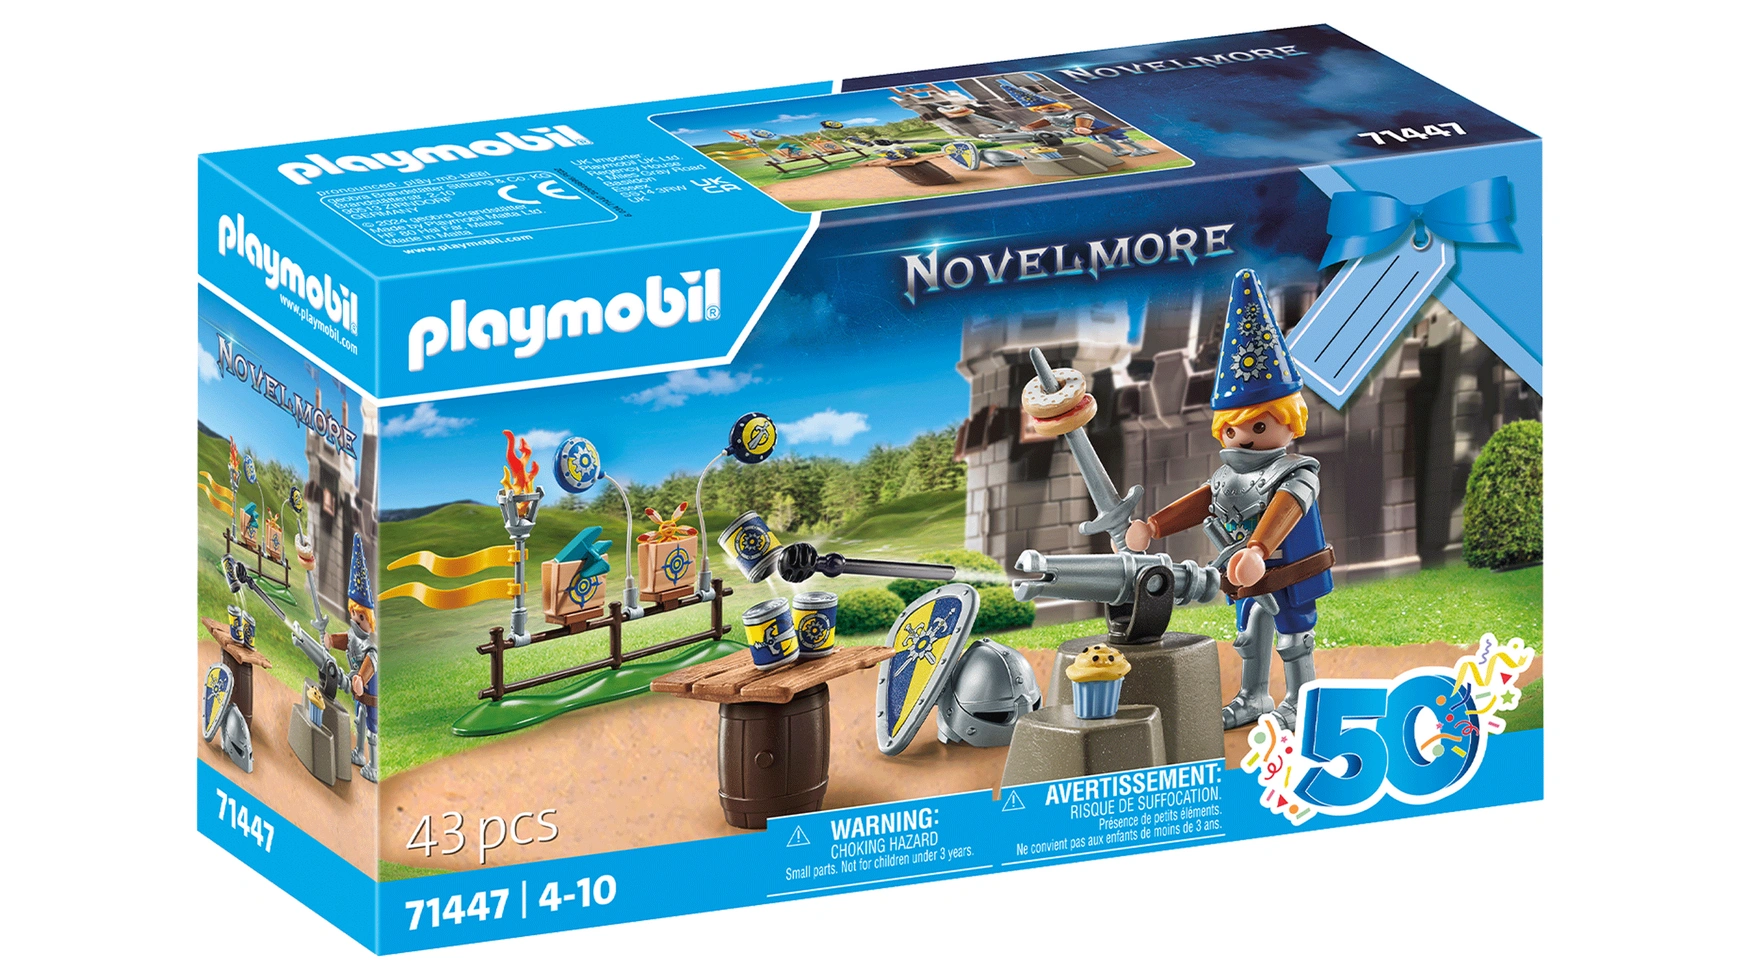 Novelmore день рождения рыцаря Playmobil novelmore мои фигурки рыцари новелмора playmobil